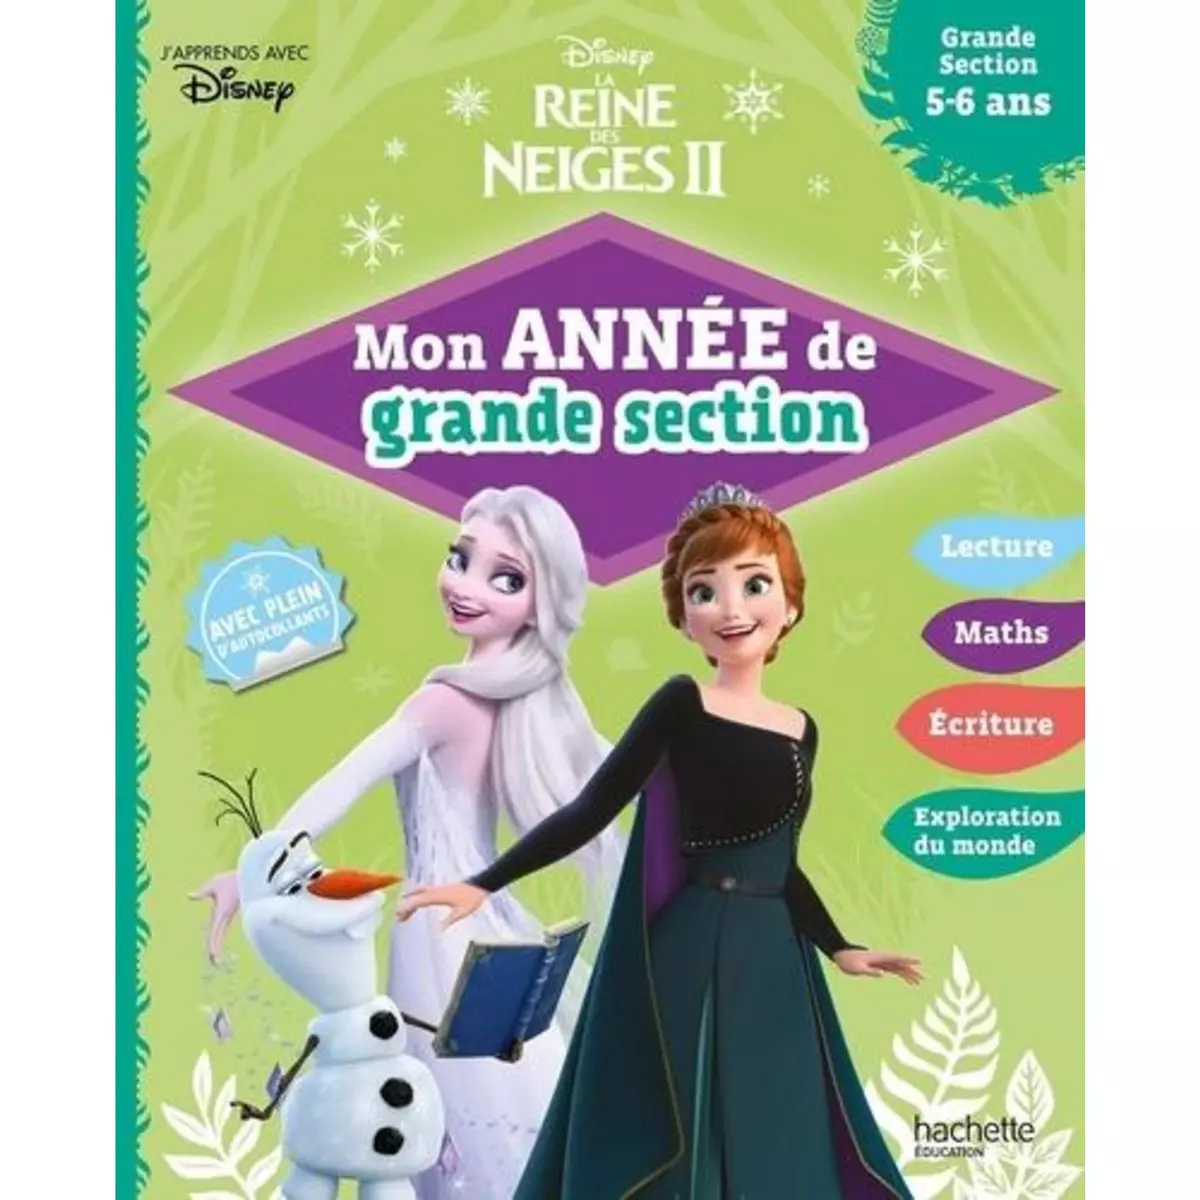  MON ANNEE DE GRANDE SECTION. LA REINE DES NEIGE II, Hachette Education